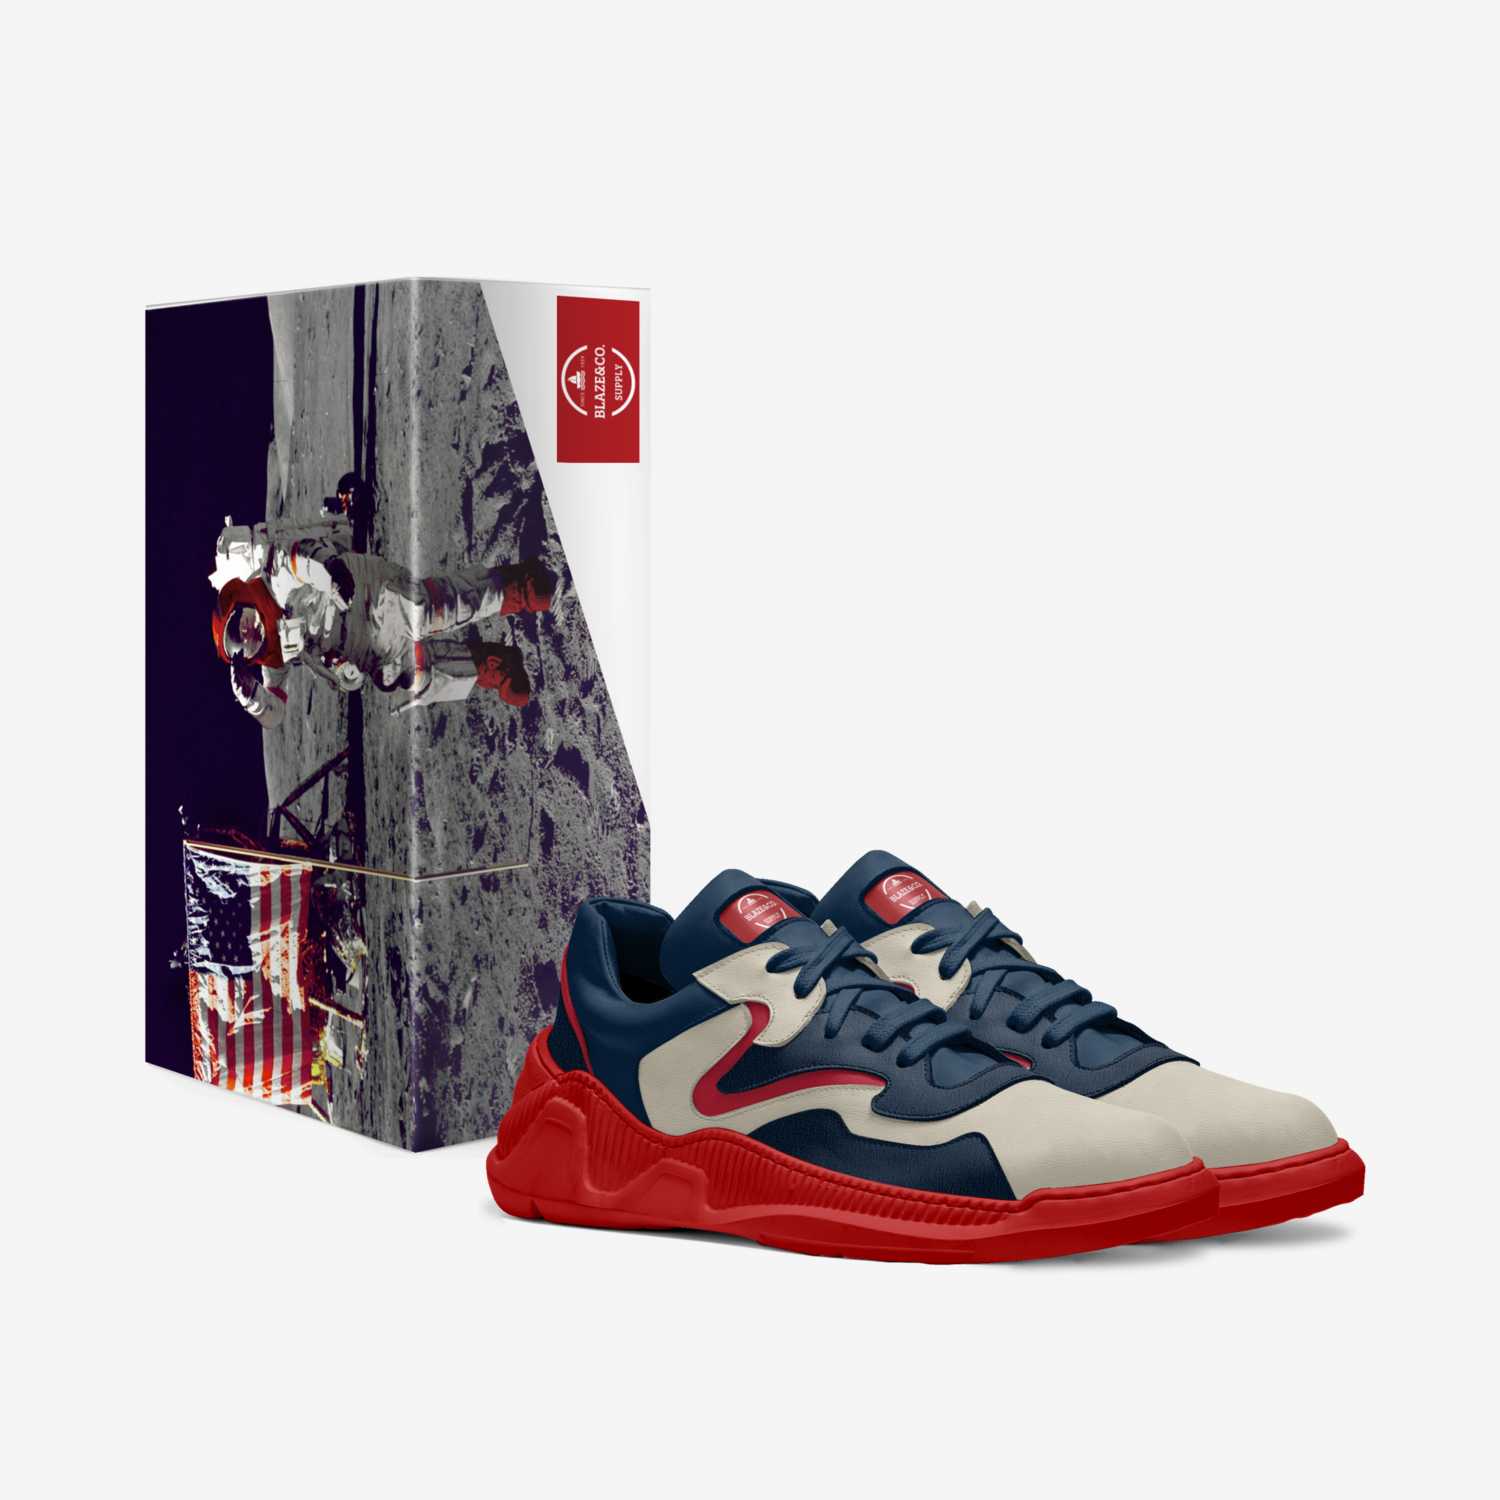 Blaze Masterz custom made in Italy shoes by Skylar Trujillo | Box view